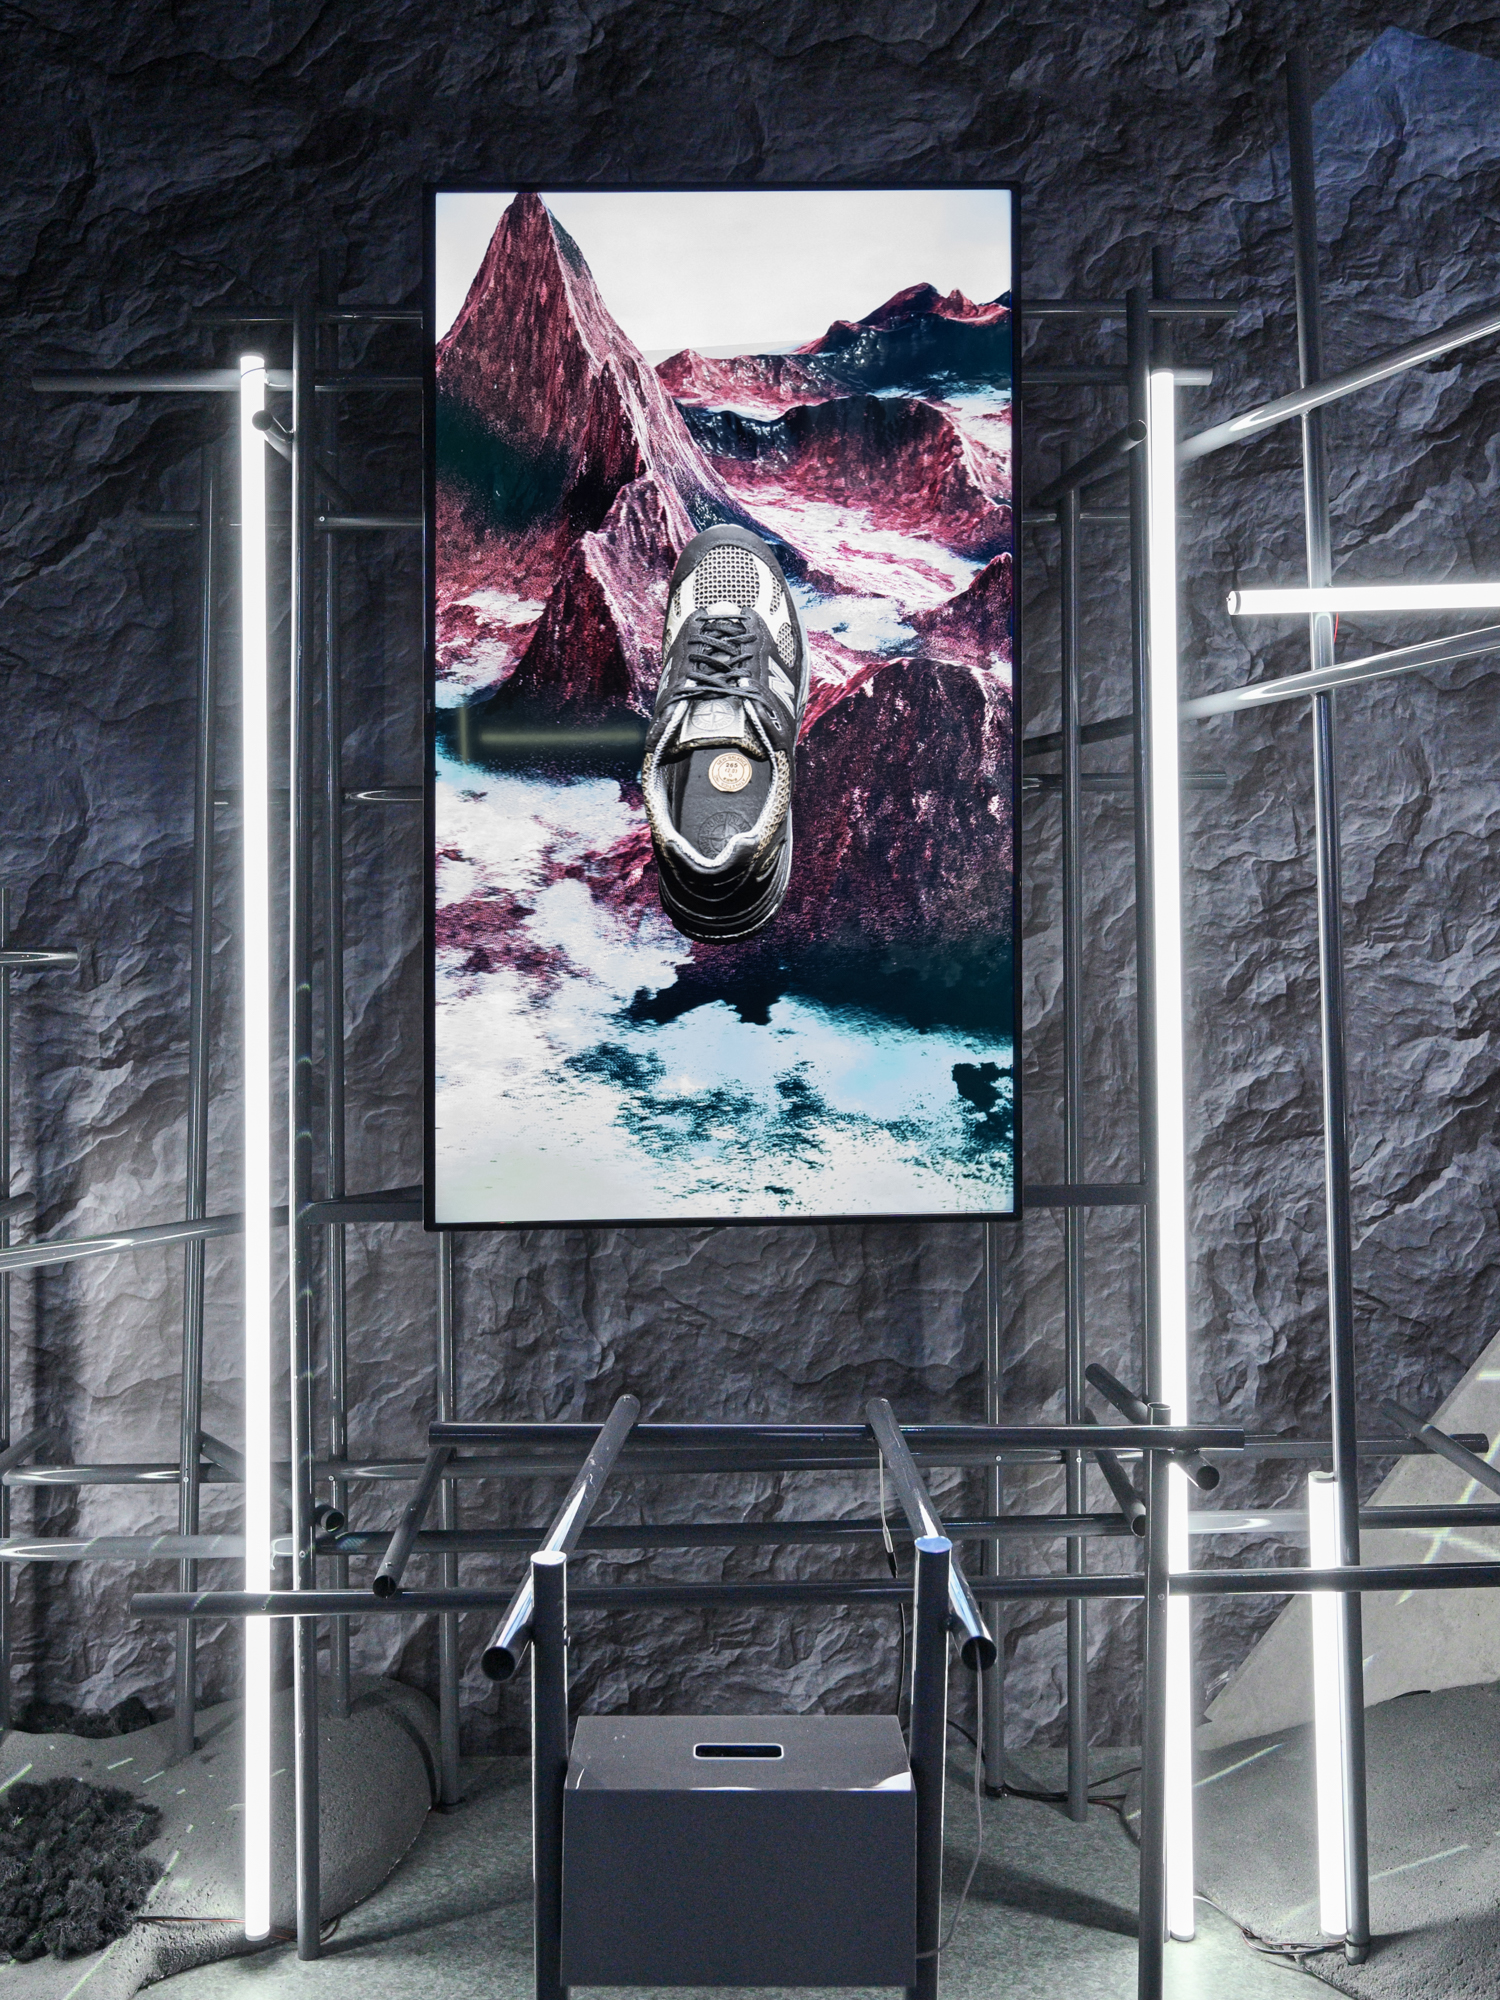 Stone Island x New Balance 于北京 SKP-S 打造「STEP INTO THE MOVING LAND」沉浸式艺术空间展览-Supreme情报网